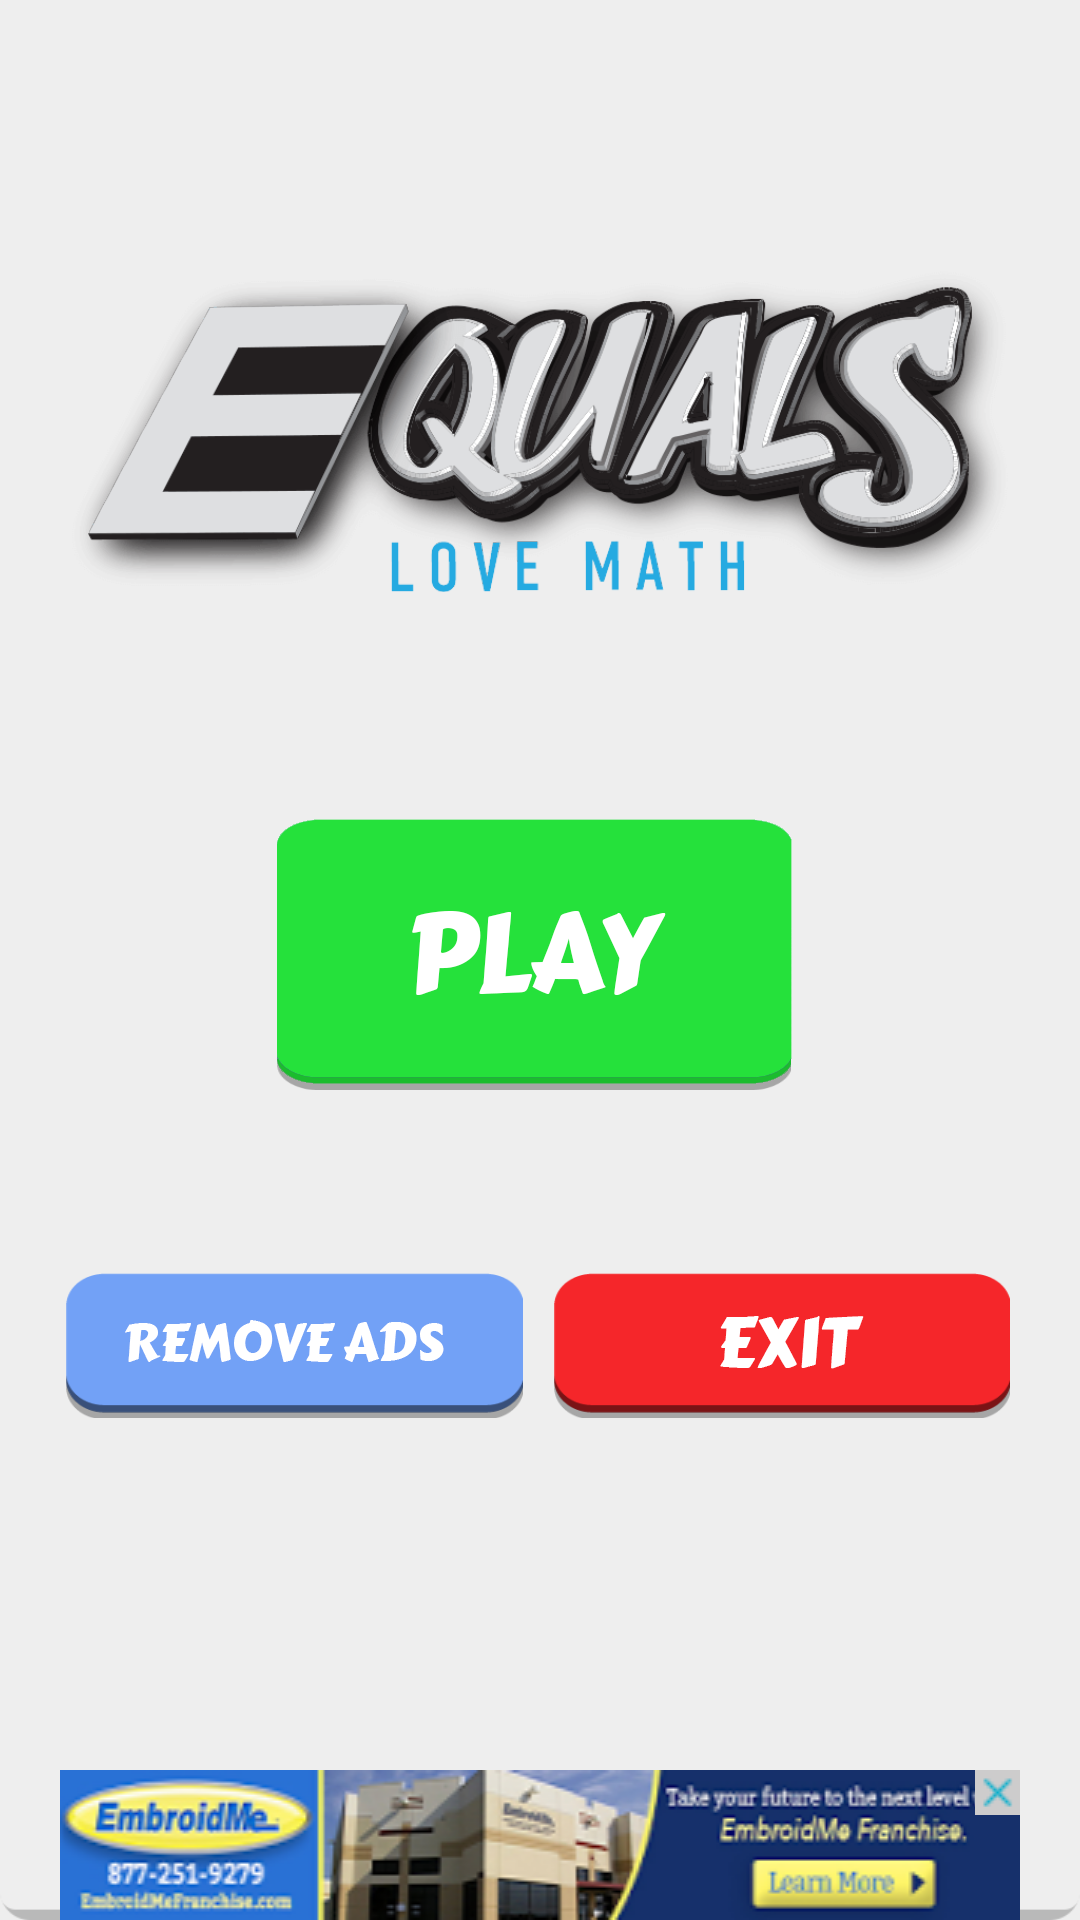 Android application Equals - Love Math! screenshort